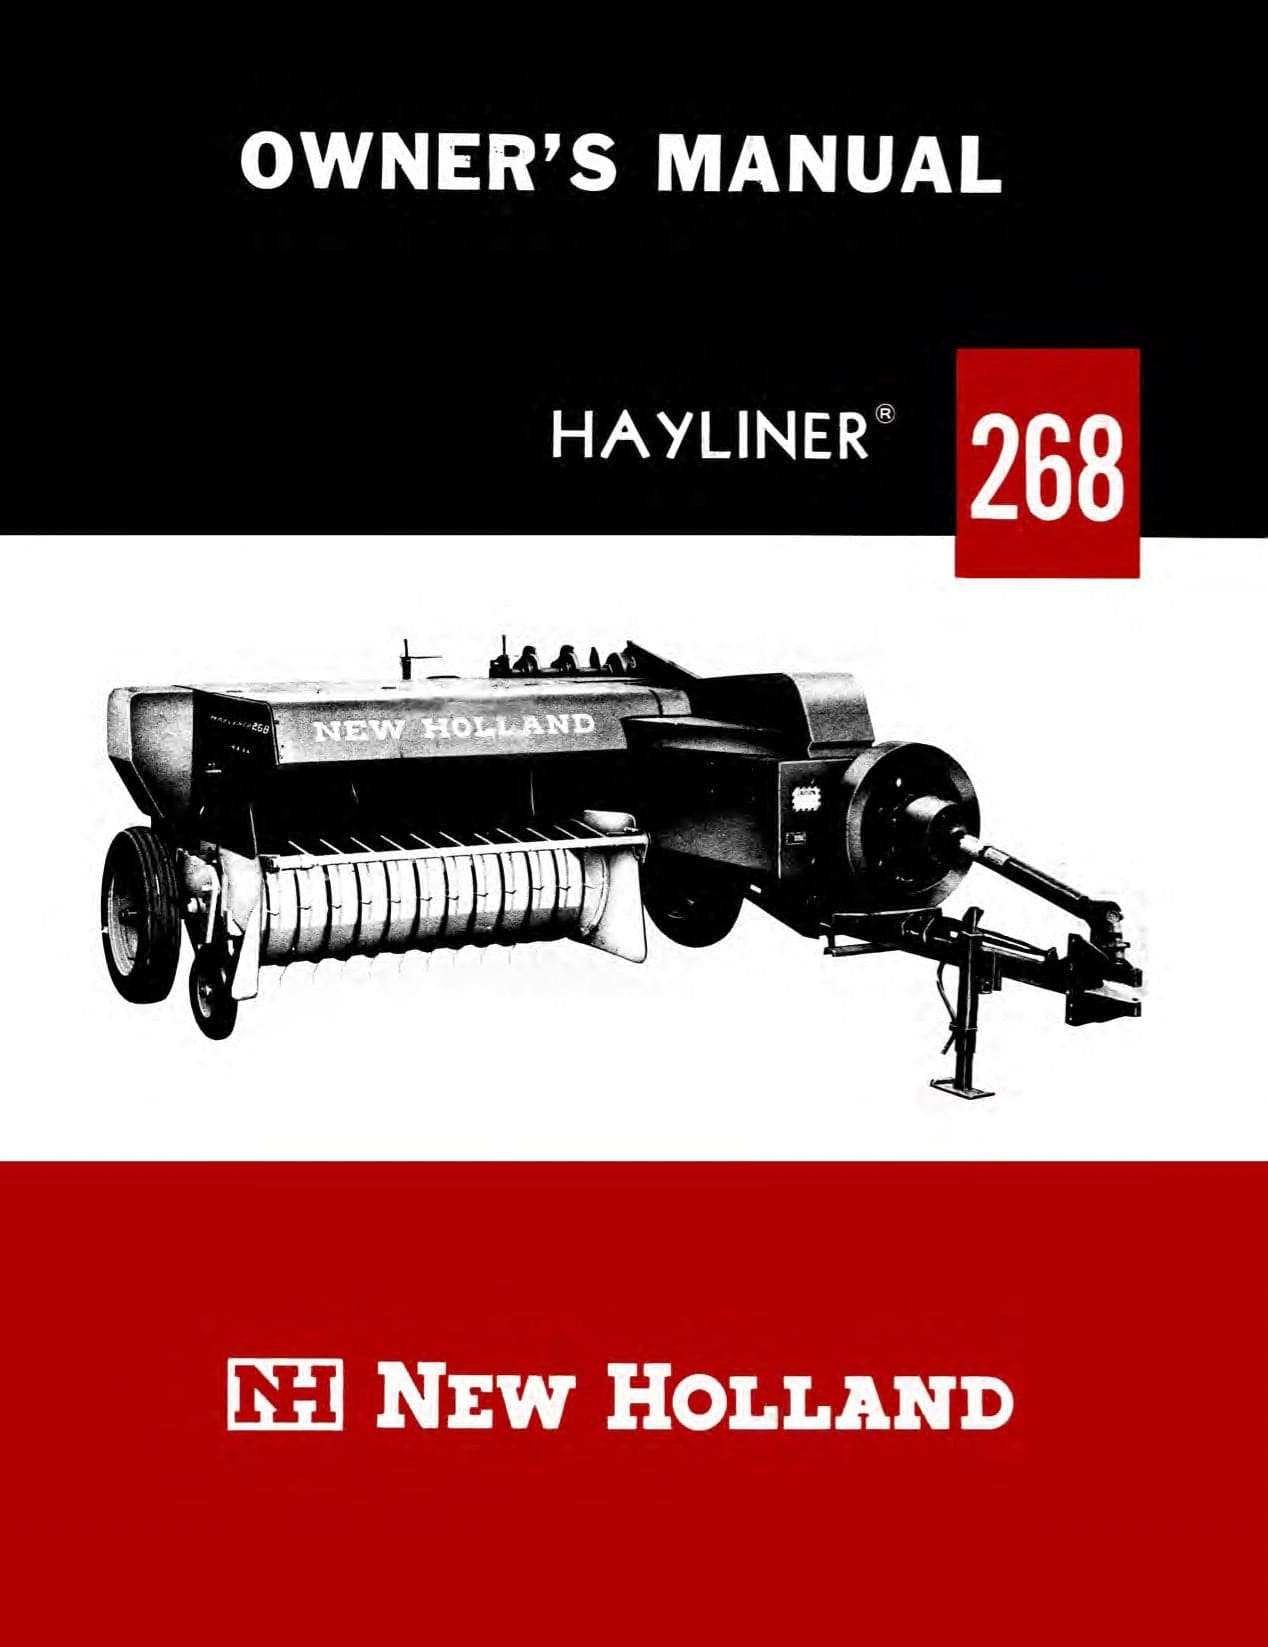 New Holland Hayliner 268 Baler - Owner's Manual - Ag Manuals - A Provider of Digital Farm Manuals - 1